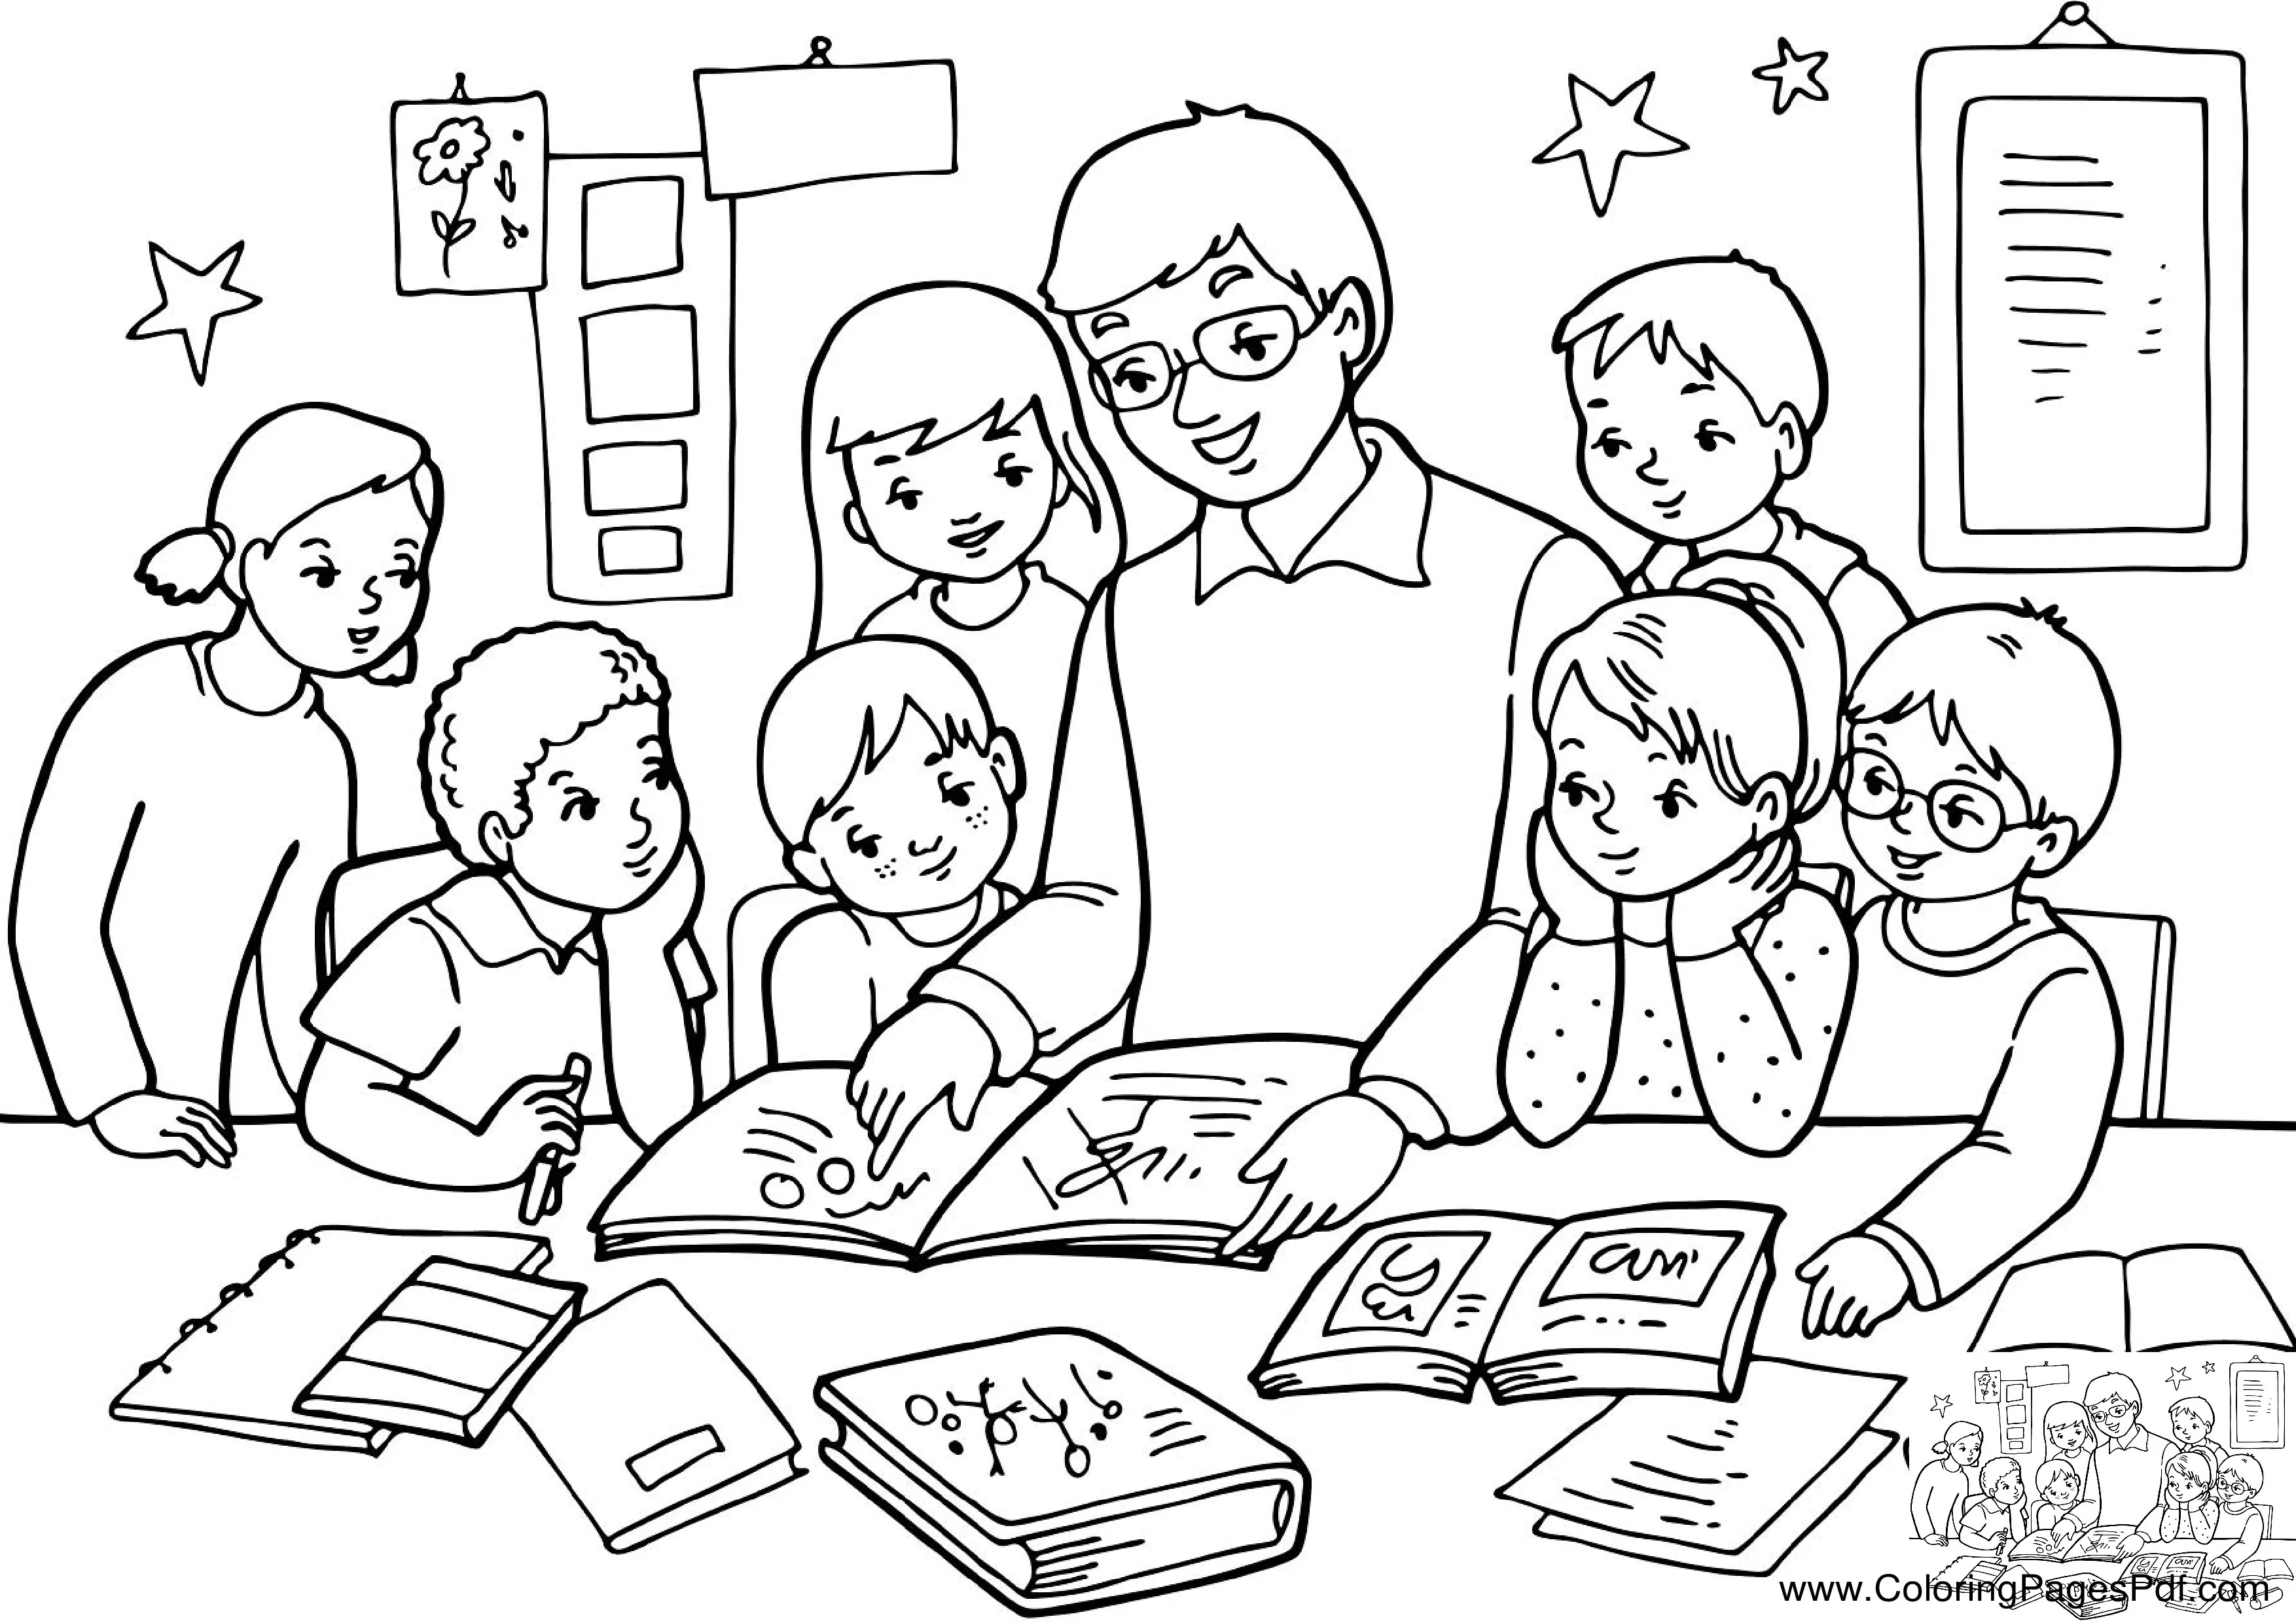 Free kids coloring book